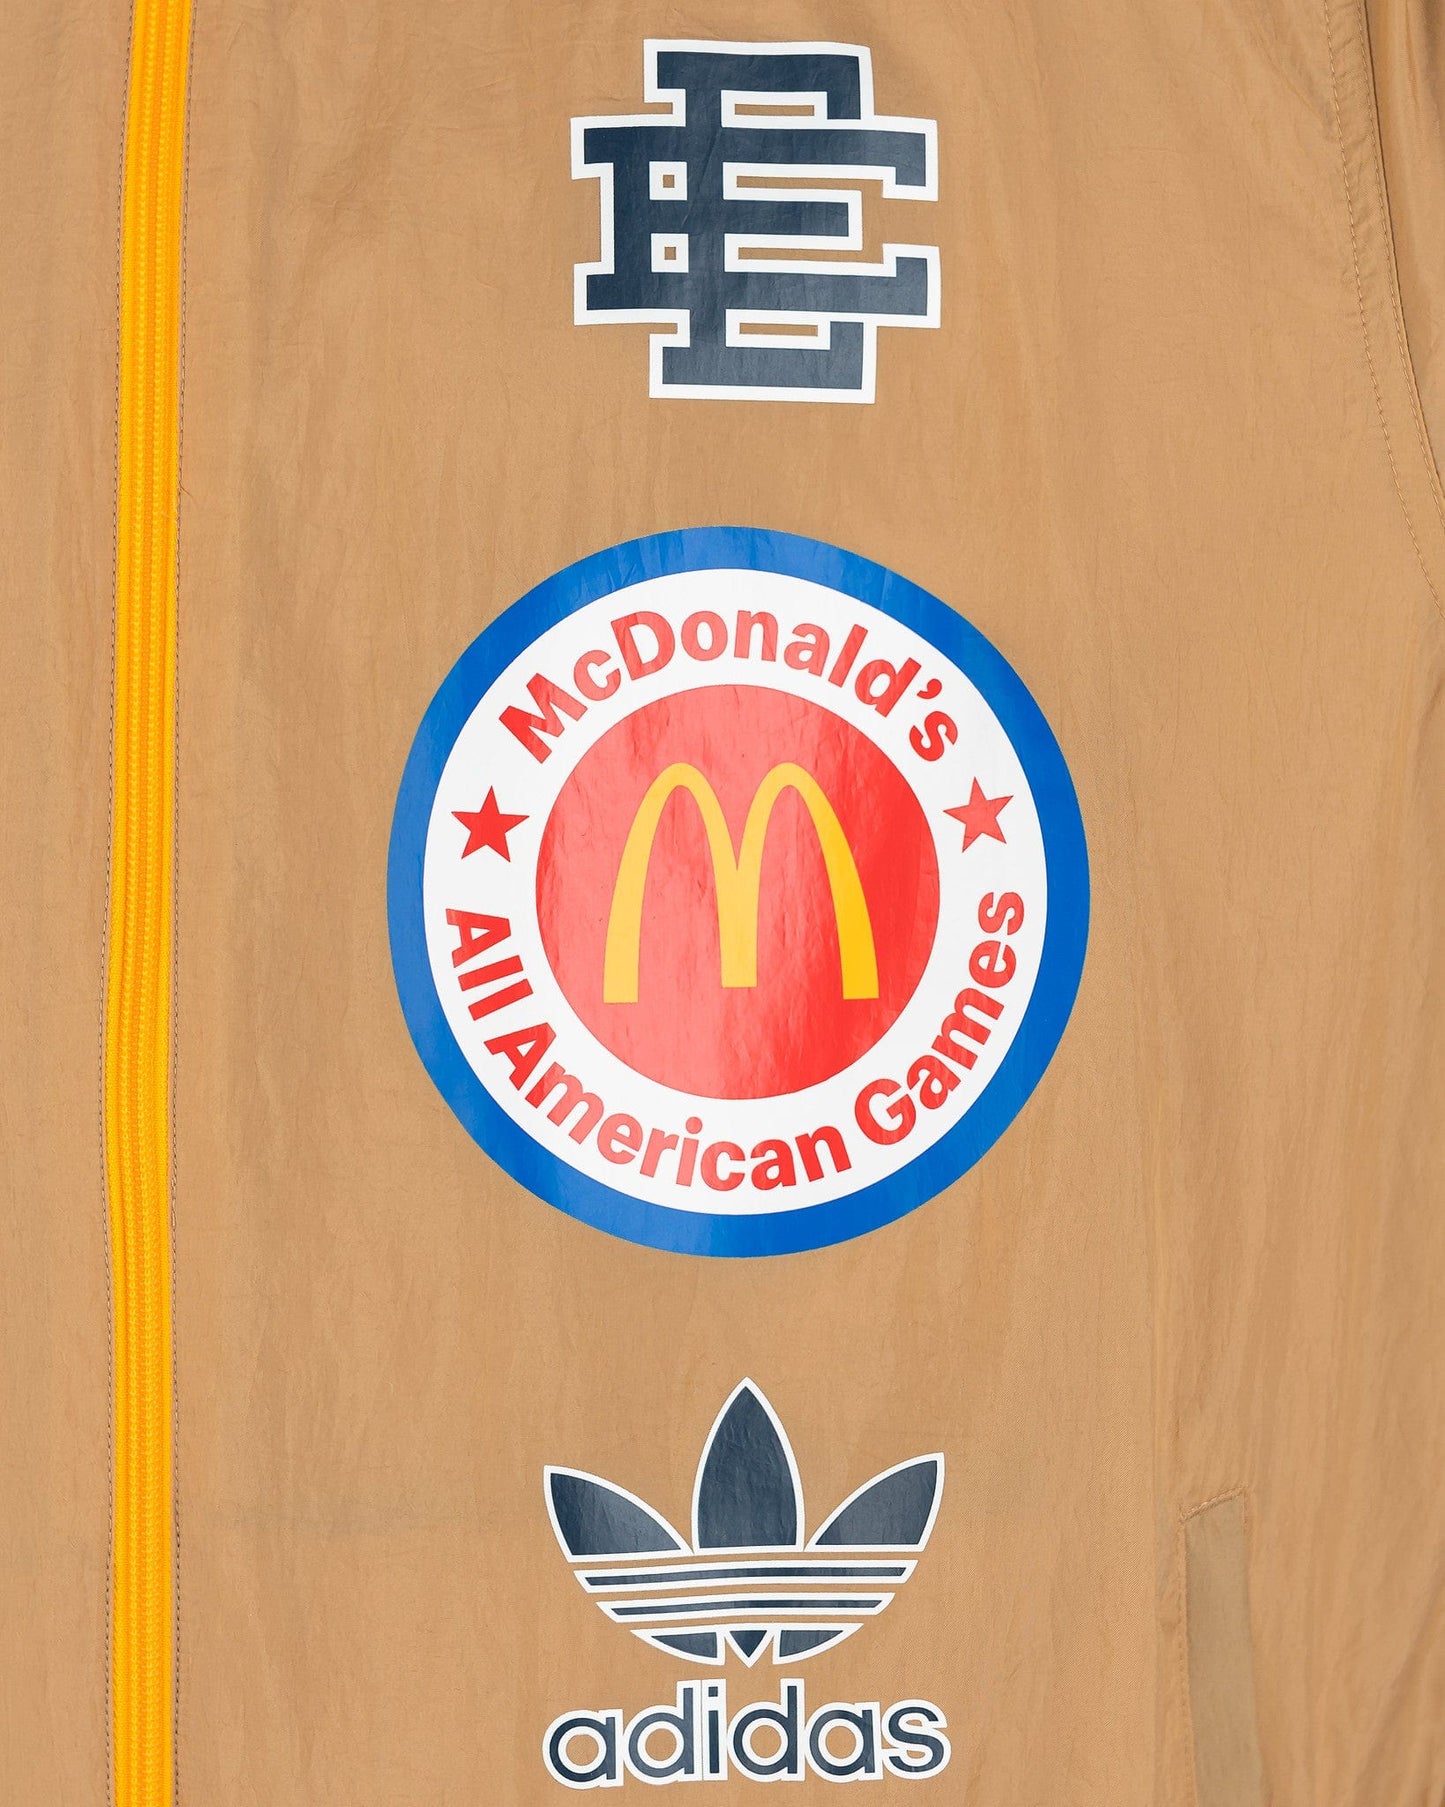 Adidas Men's Jackets Eric Emanuel McDonalds All American Ceremony Jacket in Khaki